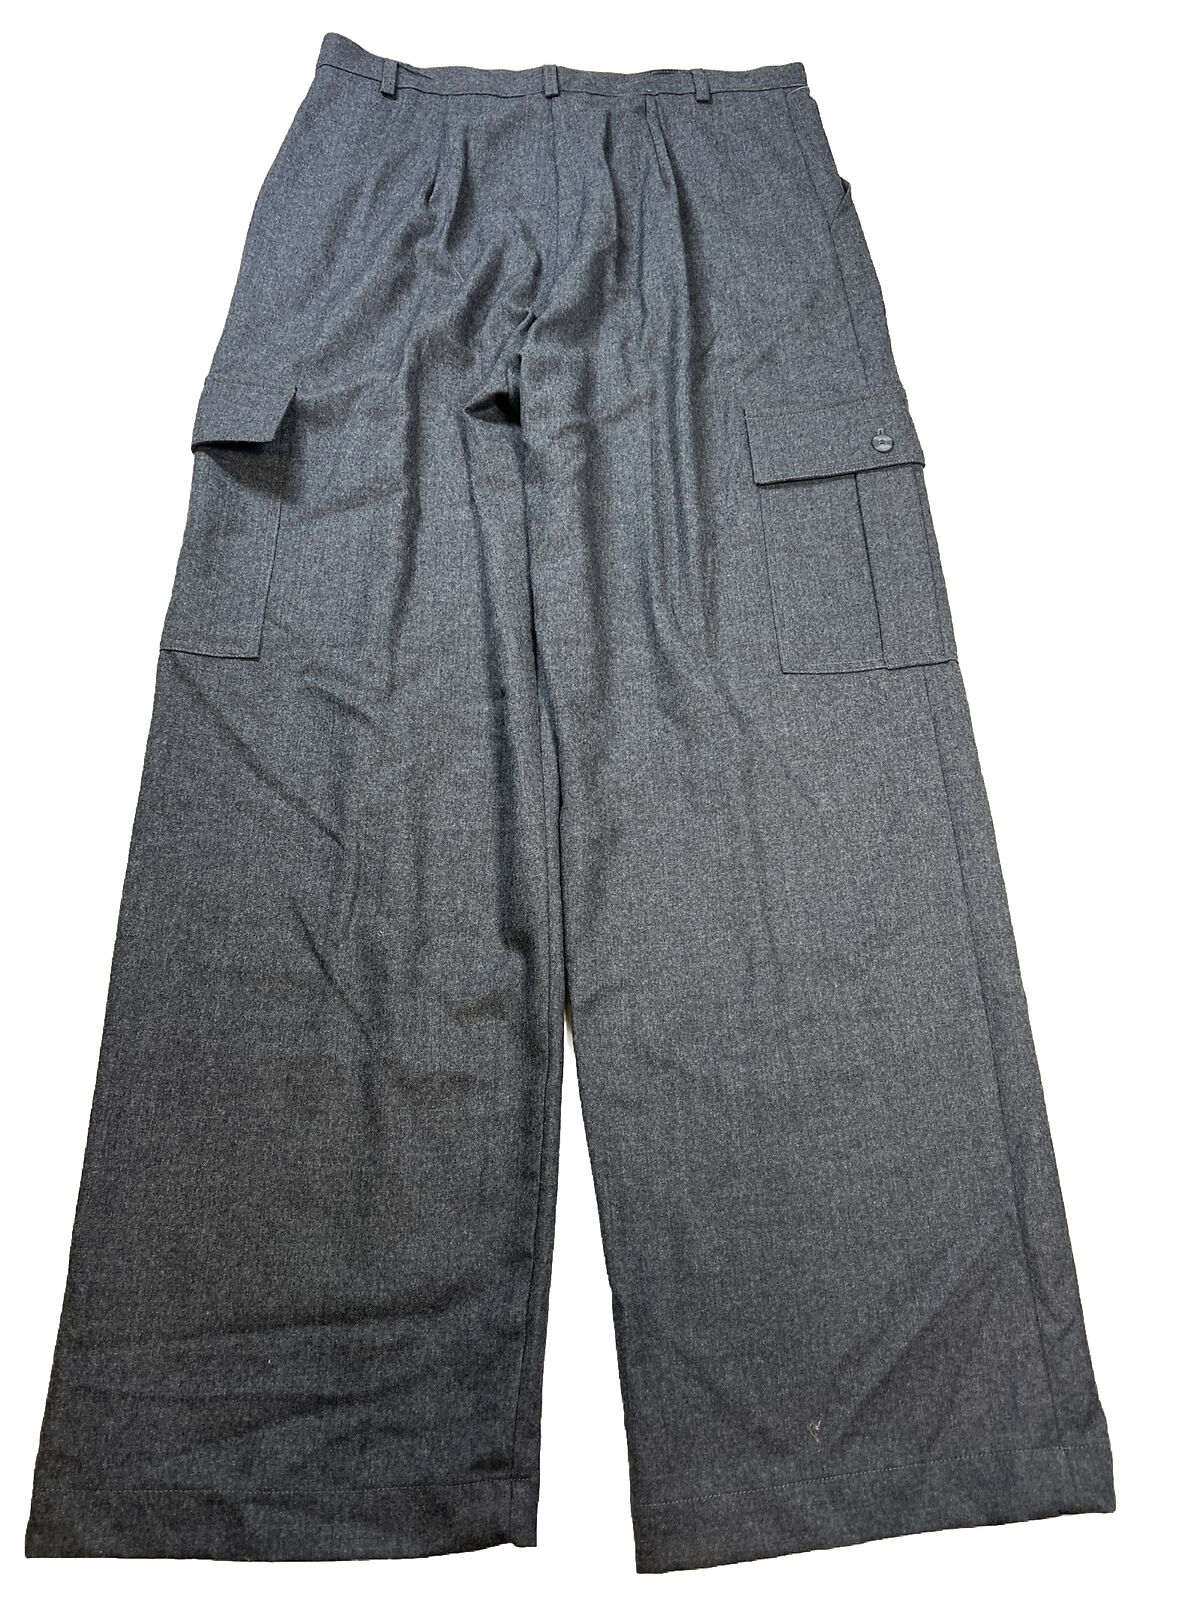 NEW Bloomingdales Women's Gray Wool Cargo Dress Pants - 14